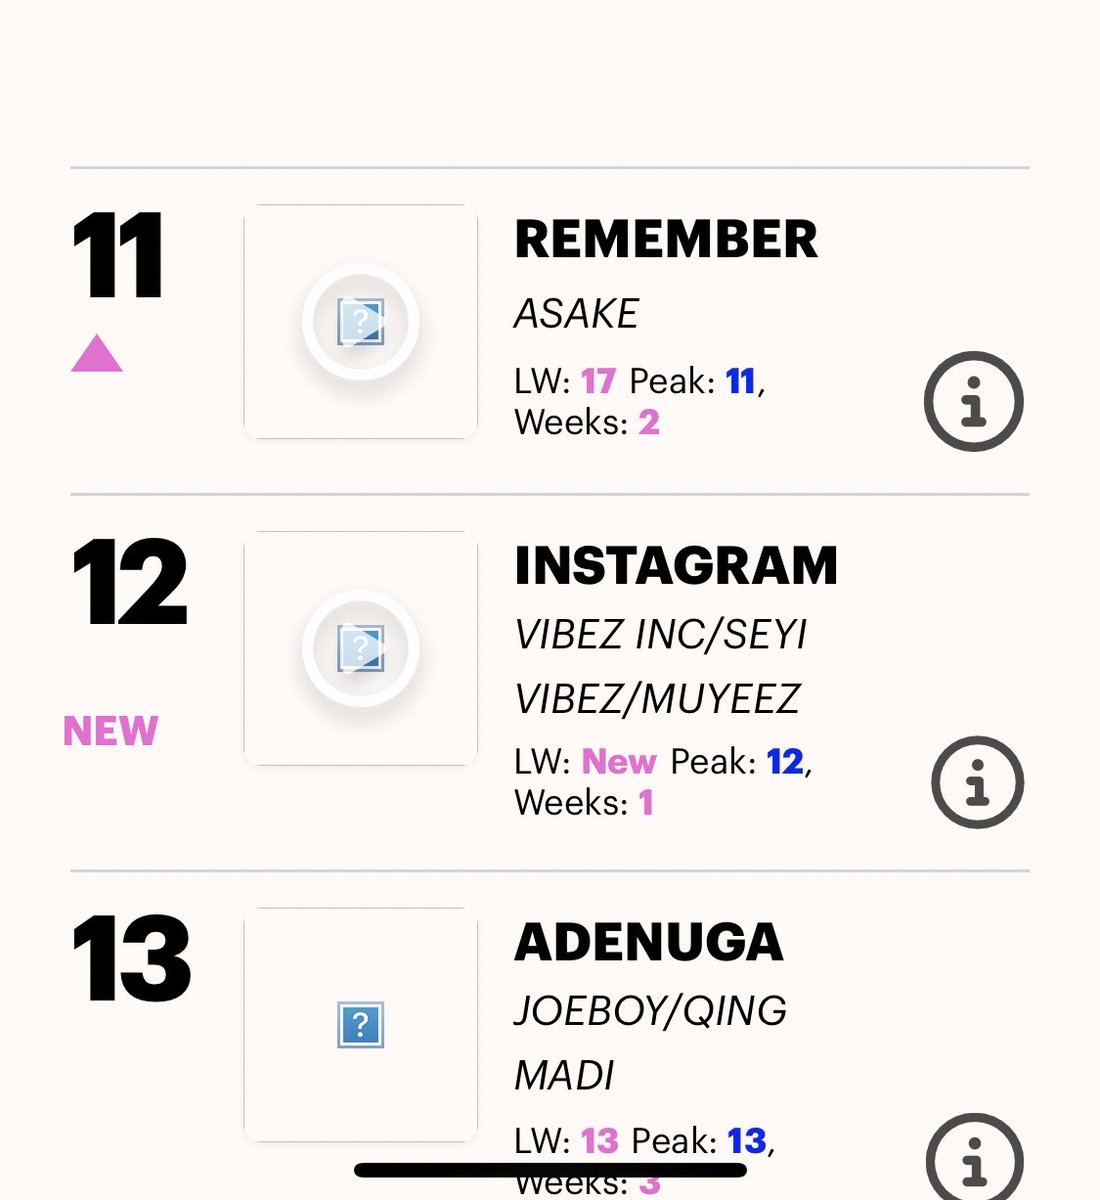 Asake’s REMEMBER peak 11 on Official uk Afrobeats chart.

Song of the summer easily 🔥🔥🔥